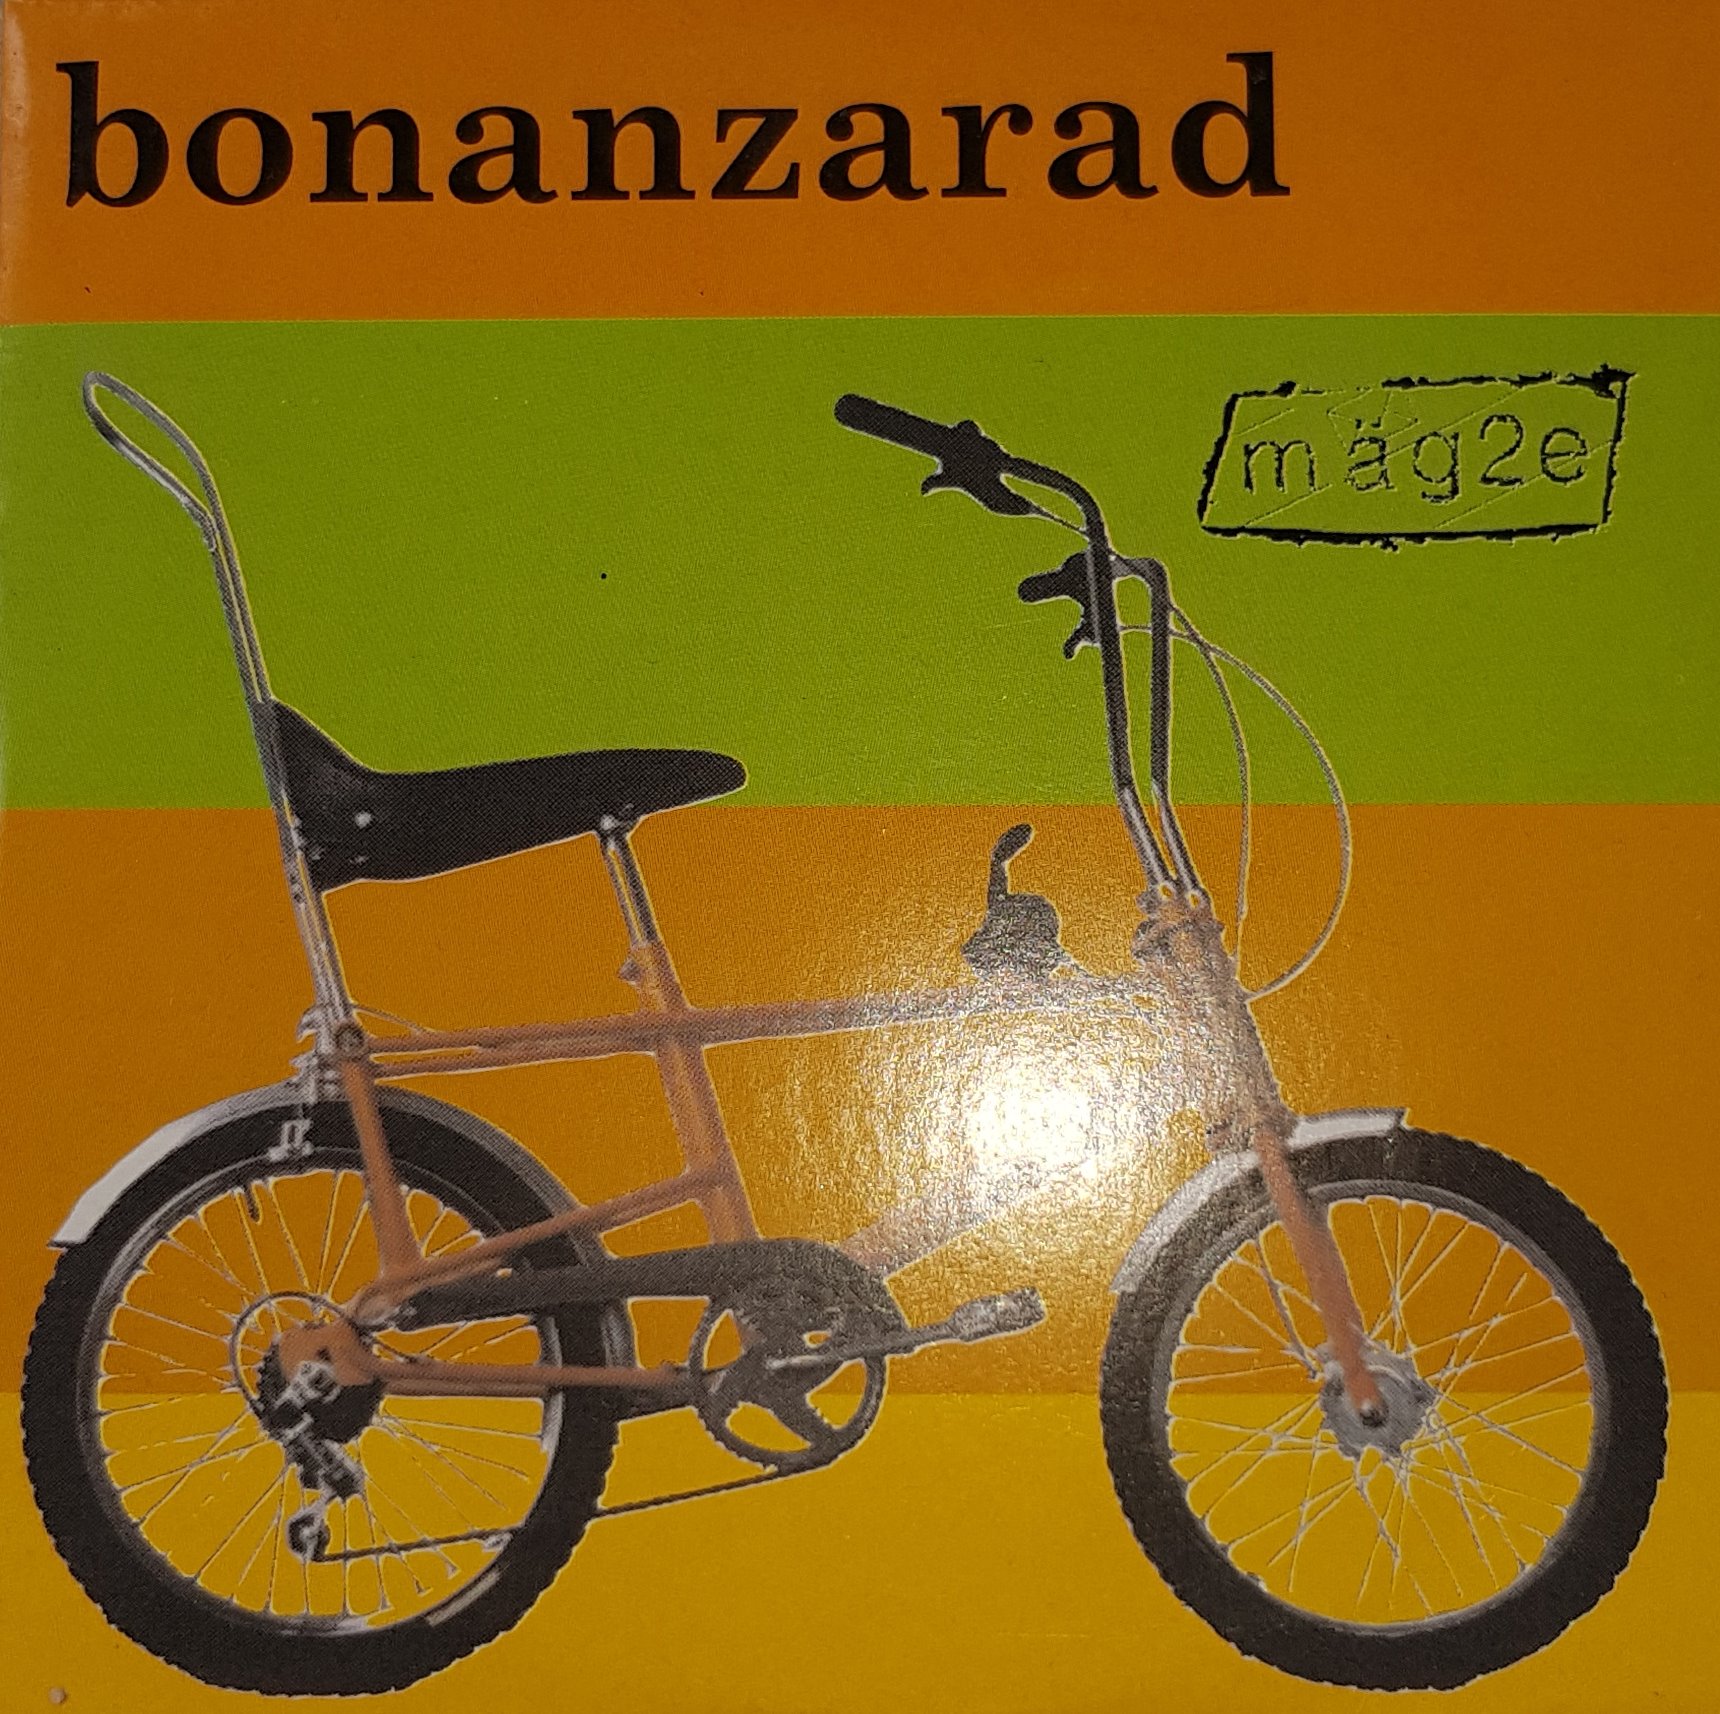 Musik CD Bonanzarad von mäg2e